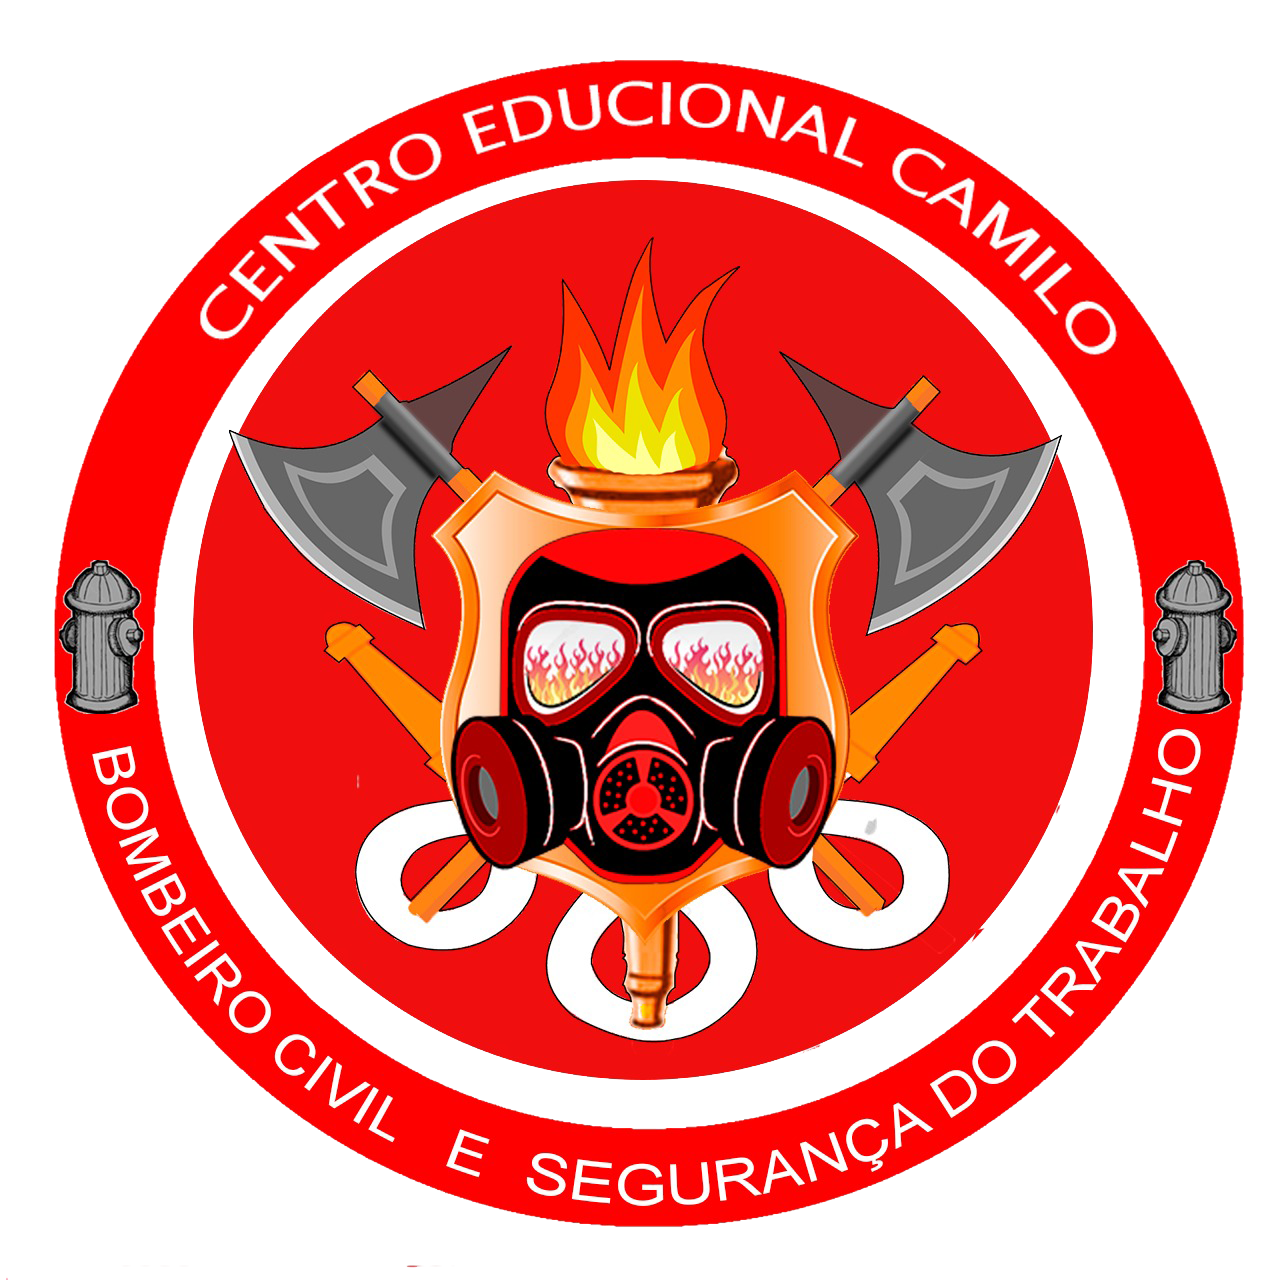 Centro Educacional Camilo